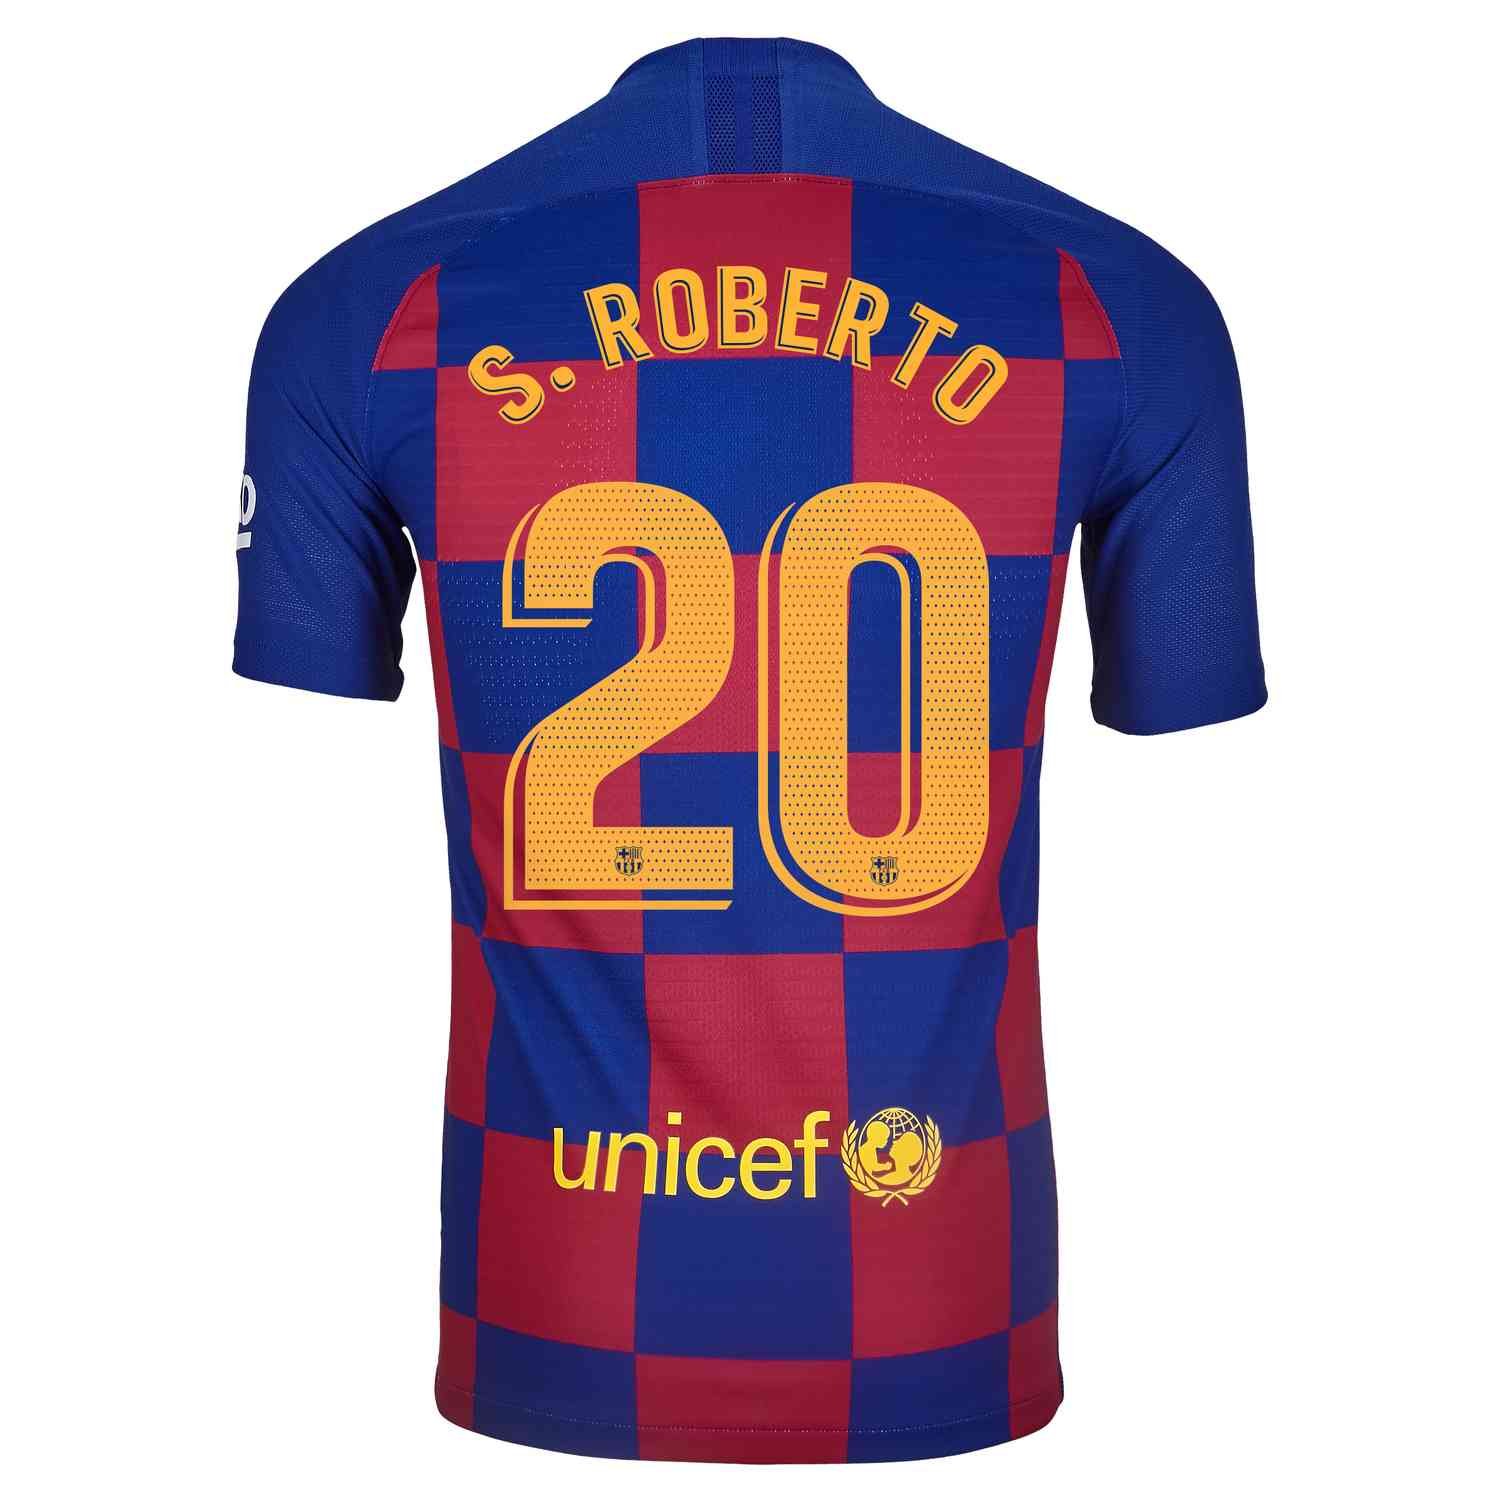 Doblez longitud Charlotte Bronte 2019/20 Nike Sergi Roberto Barcelona Home Match Jersey - SoccerPro